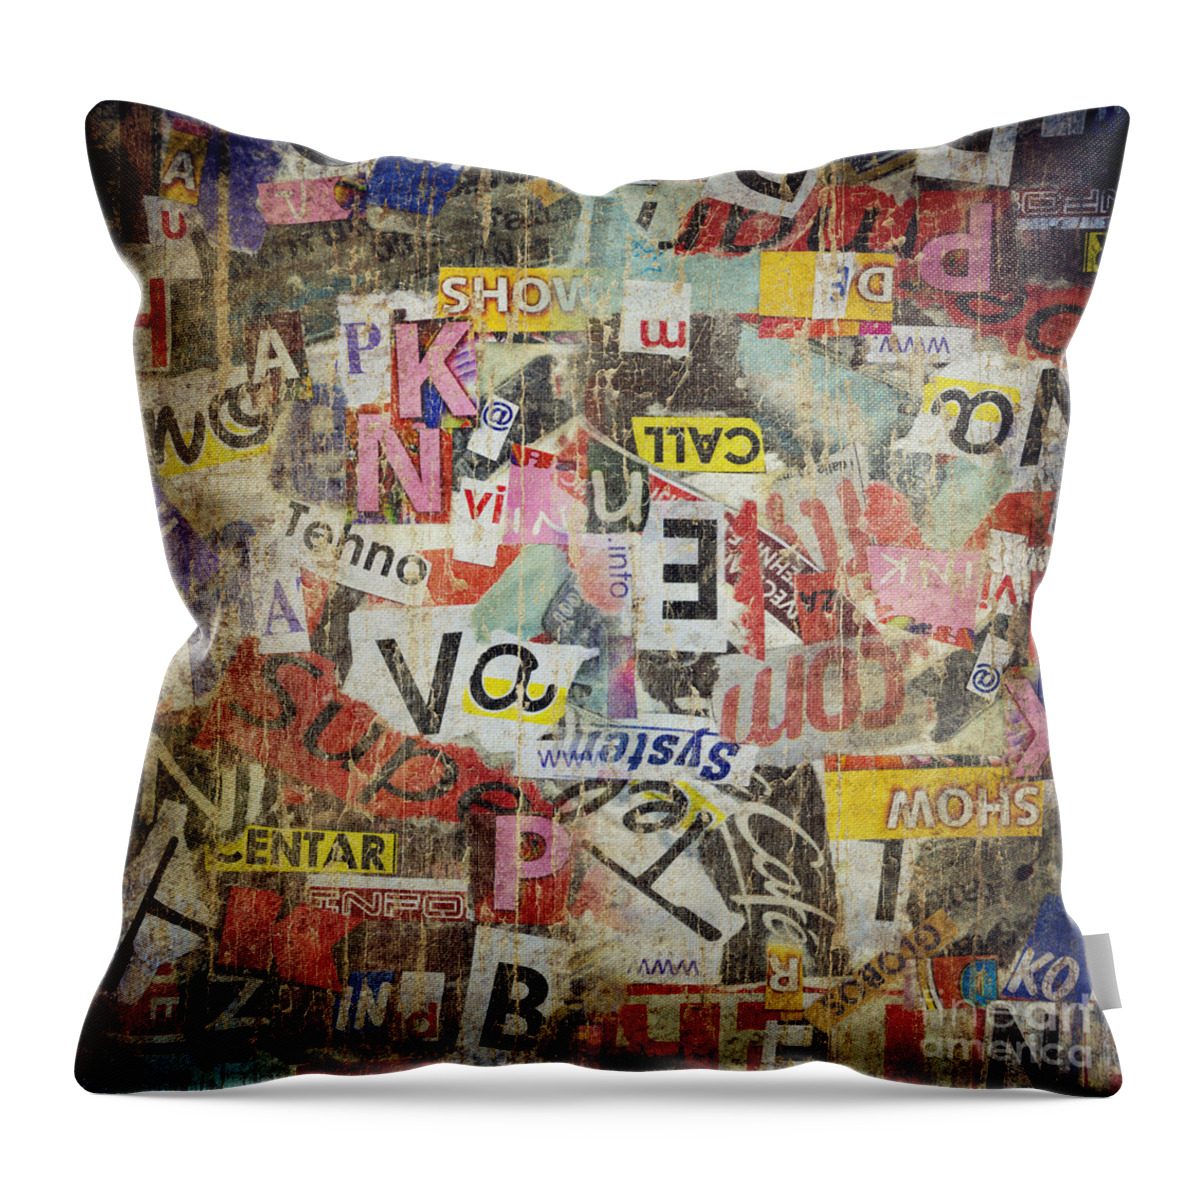 Grunge Throw Pillow featuring the digital art Grunge textured background by Jelena Jovanovic